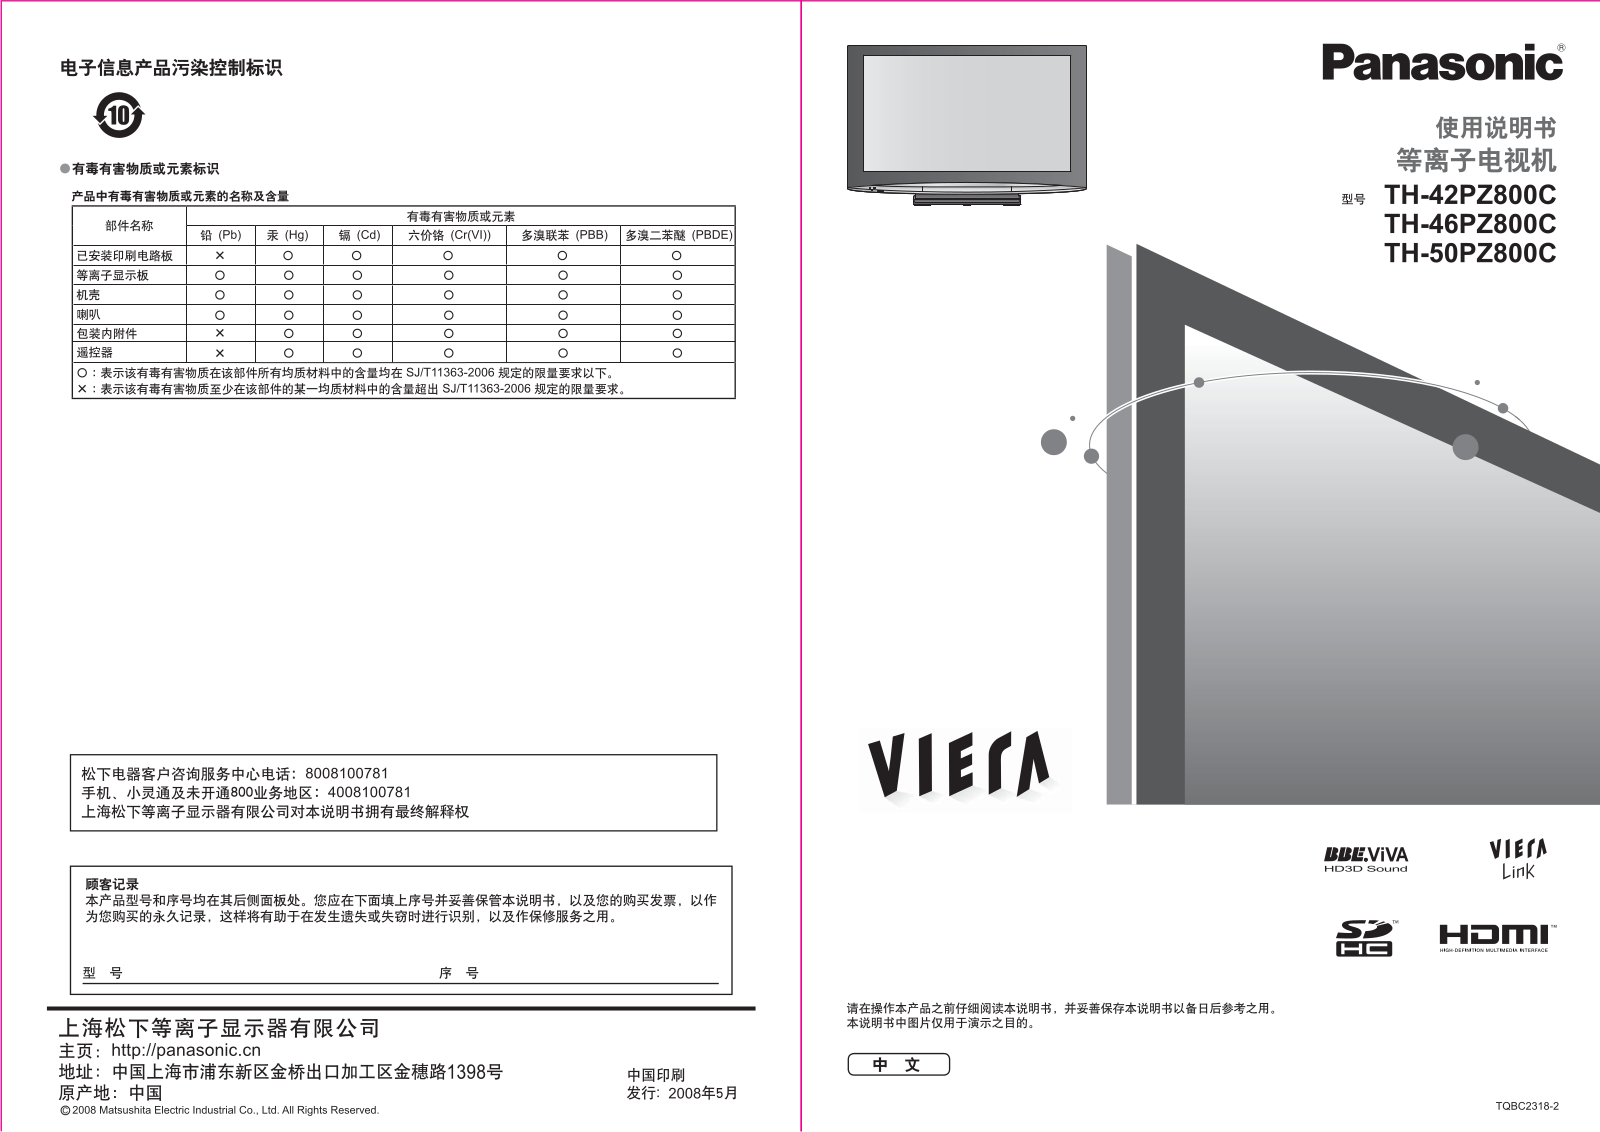 Panasonic TH-42PZ800C, TH-46PZ800C, TH-50PZ800C User Manual